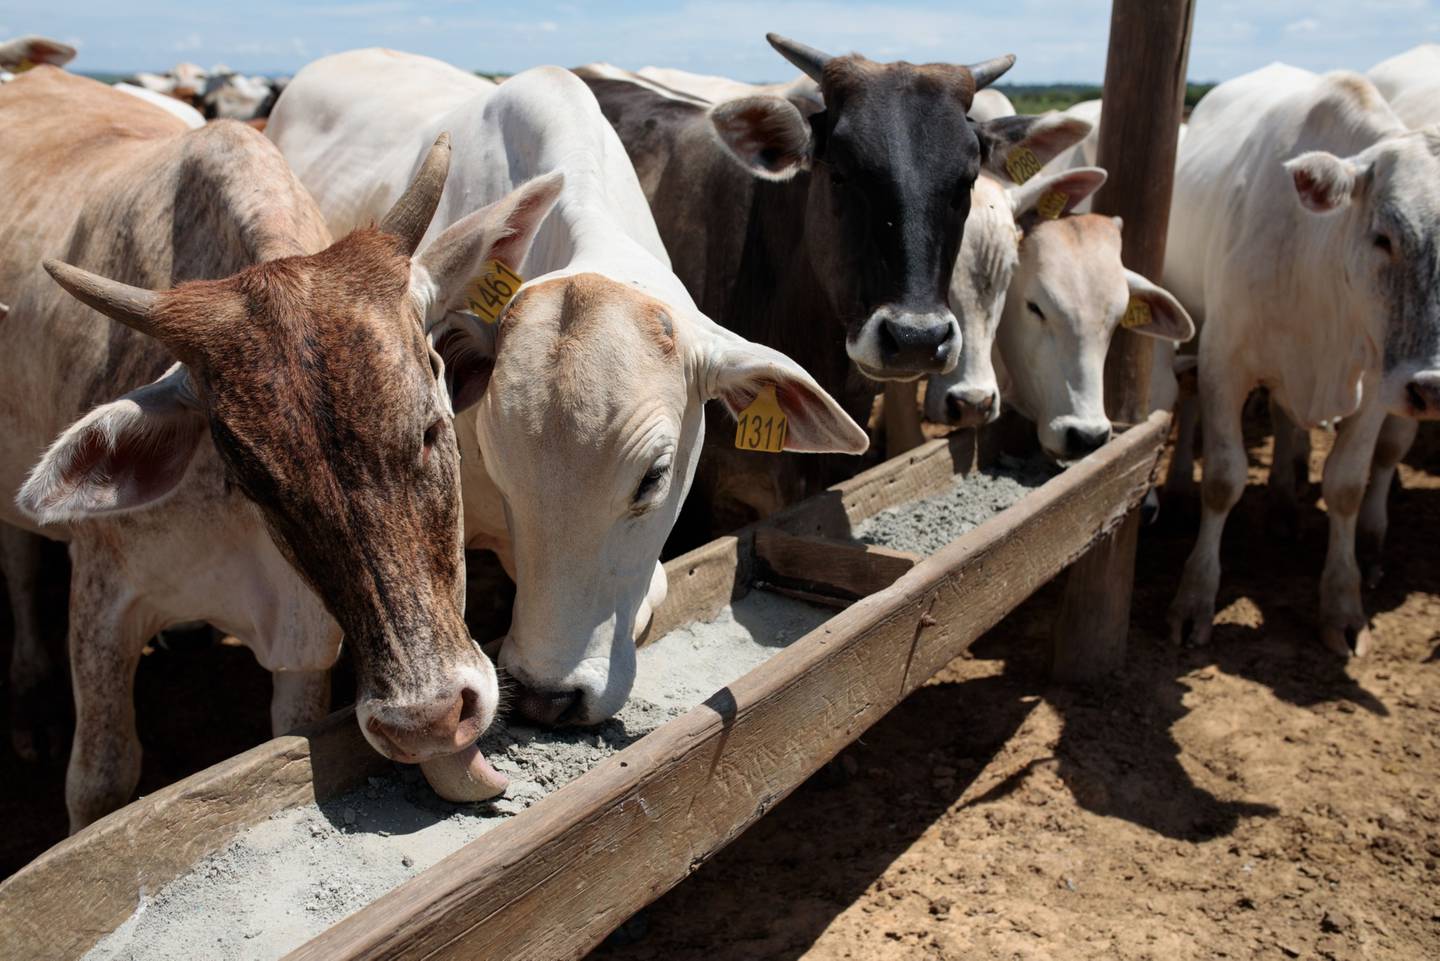 Cattle lick salt in a trough at a ranch in Paulinia, Sao Paulo state.